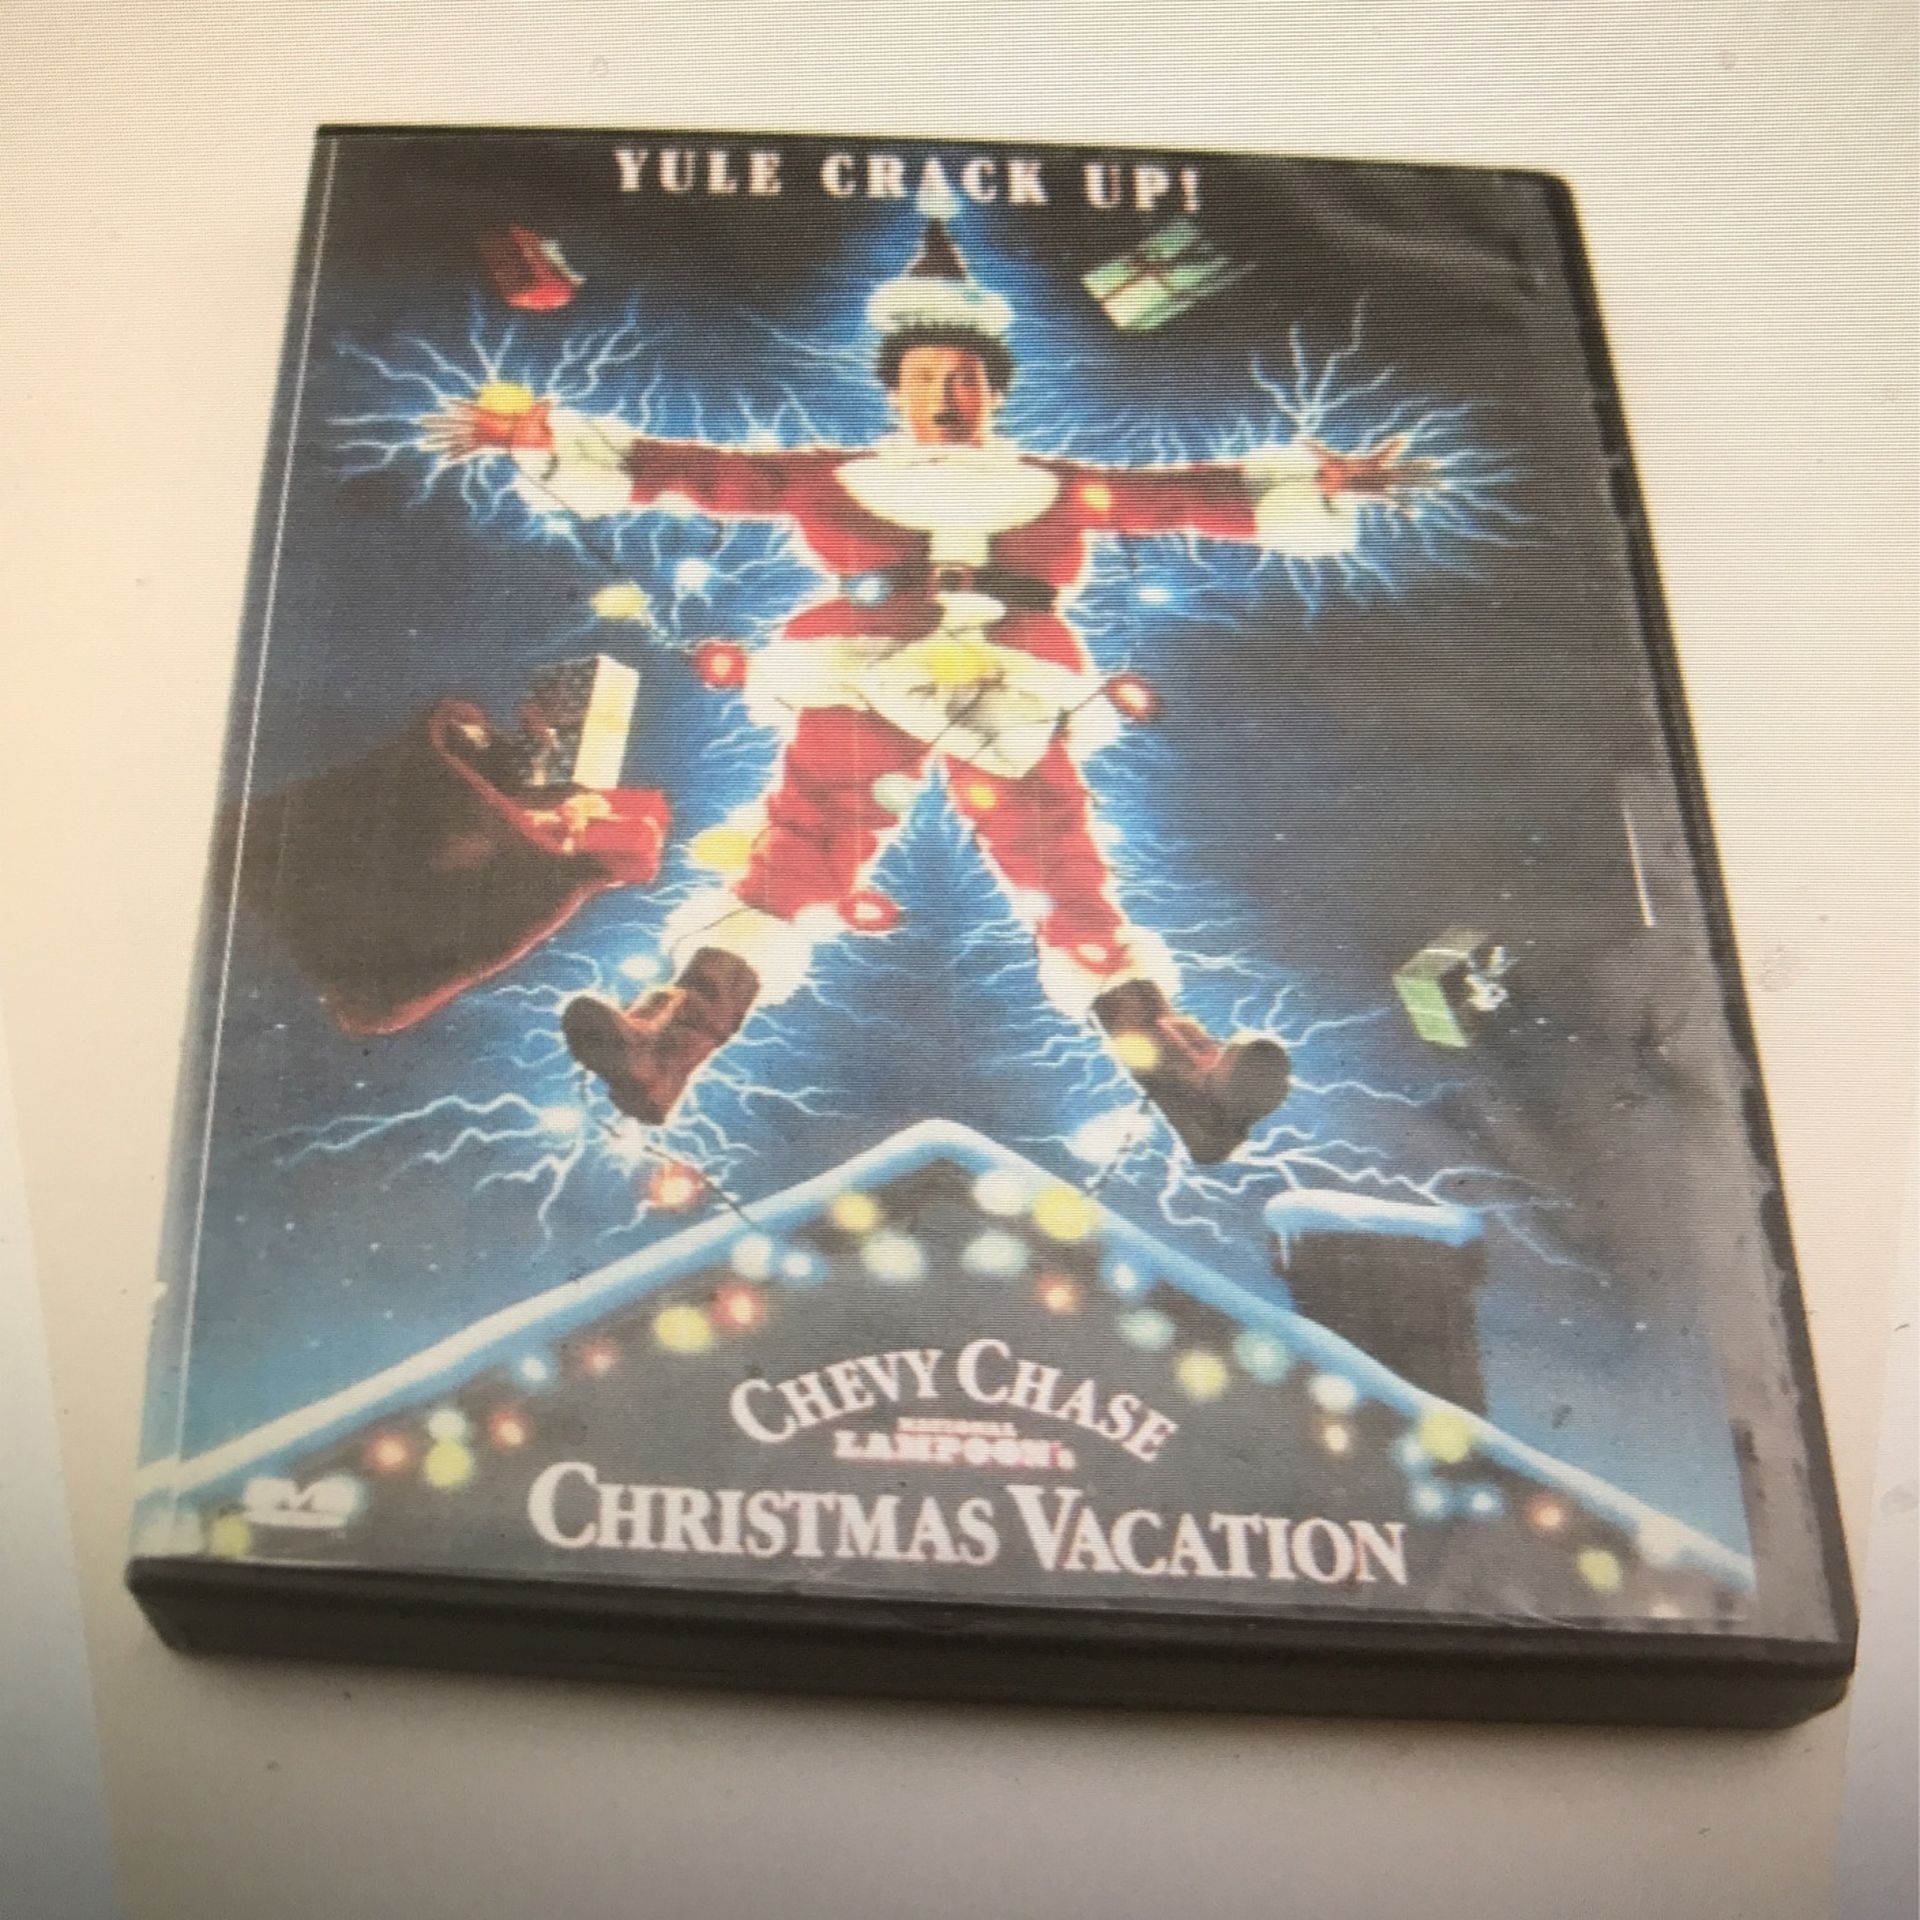 National Lampoon's Christmas Vacation (DVD) (widescreen) (Warner Bros) (PG-13)